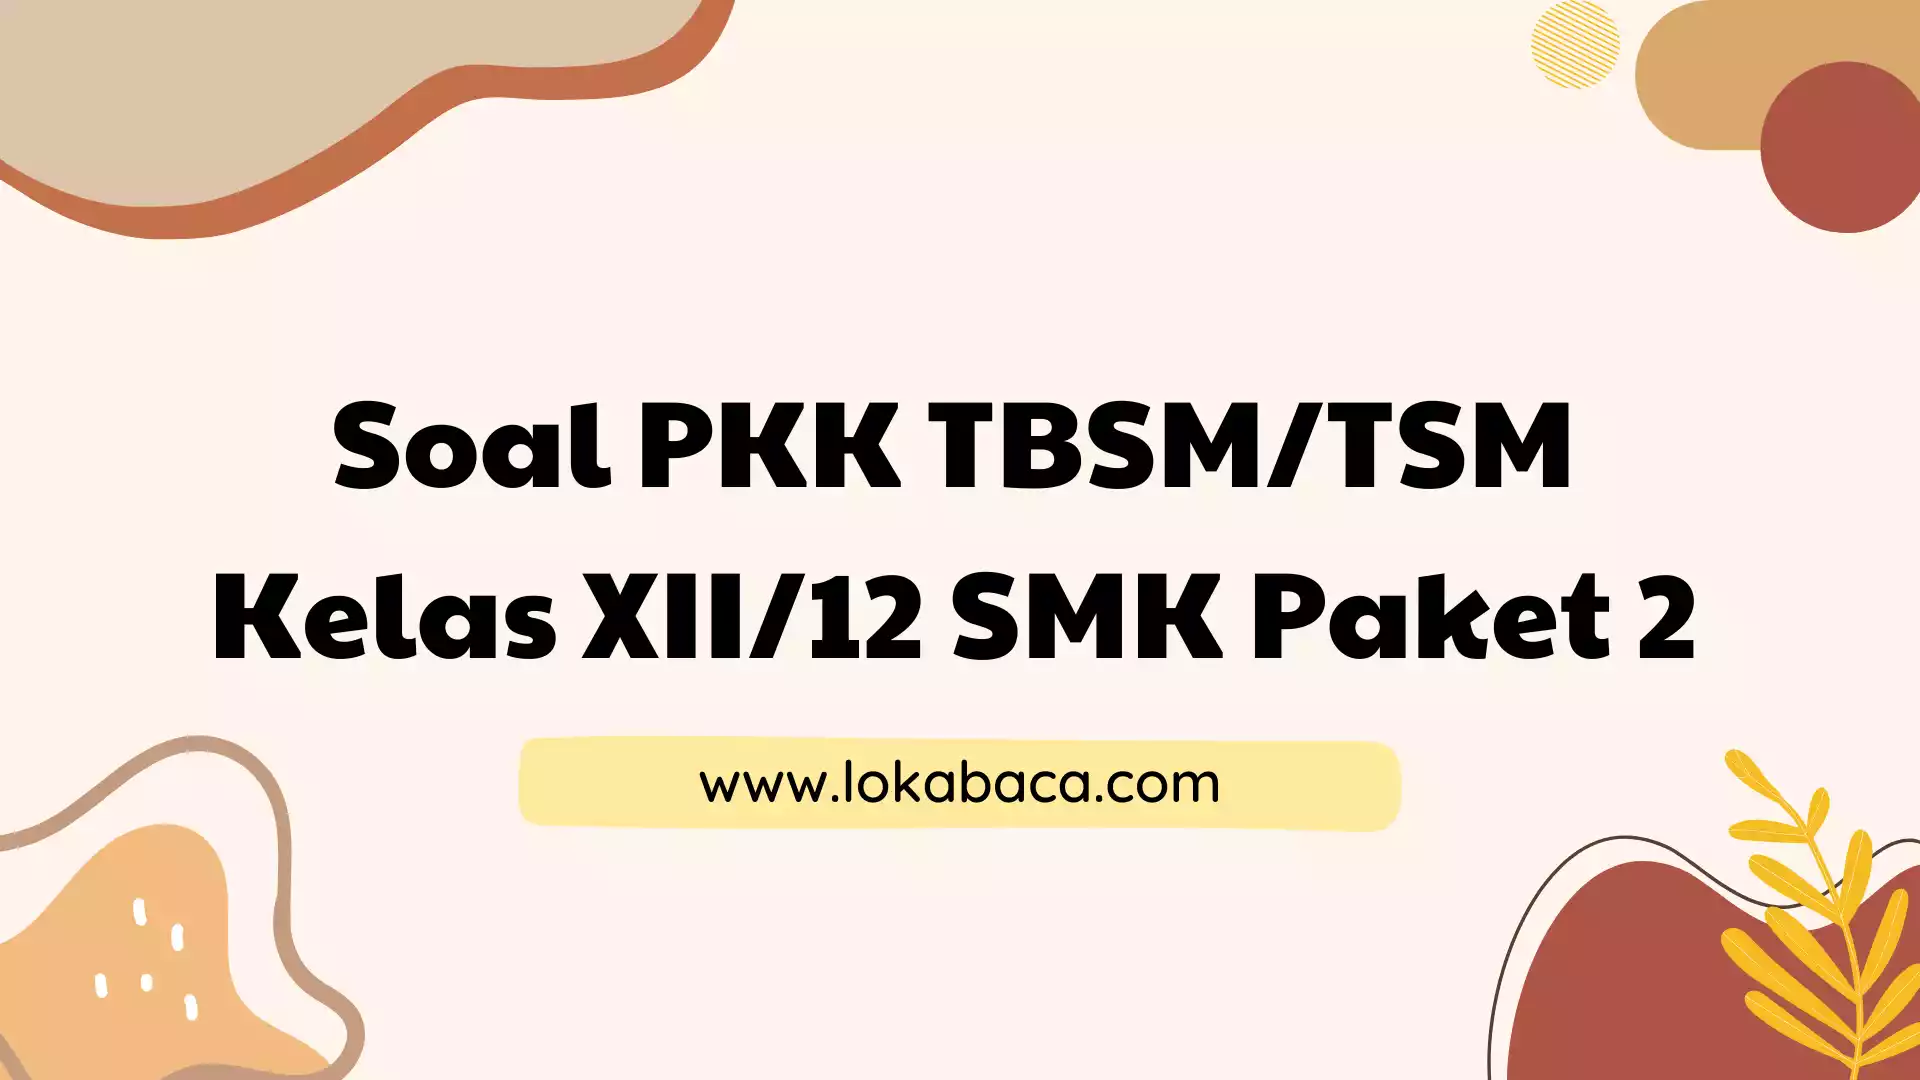 Soal PKK TBSM/TSM Kelas XII/12 SMK Beserta Kunci Jawabannya Paket 2